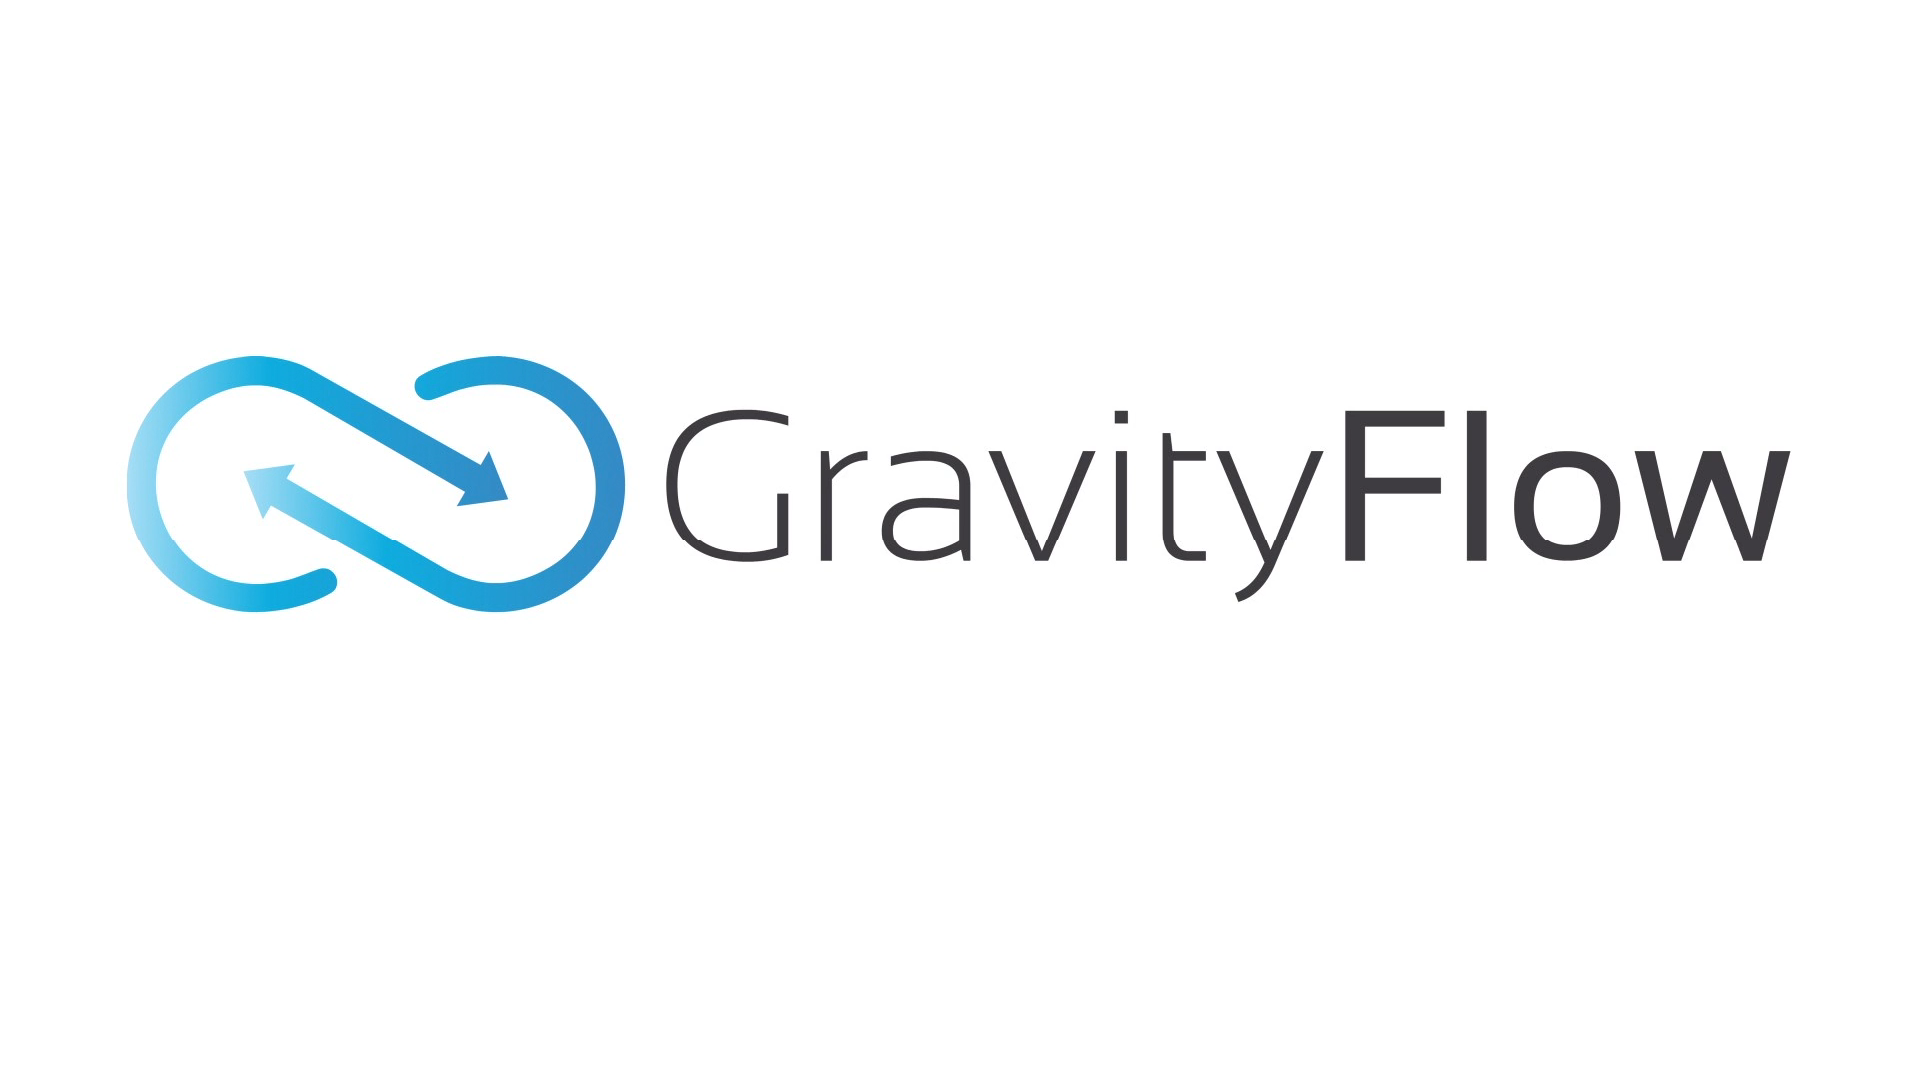 Gravity Flow Wordpress Plugin